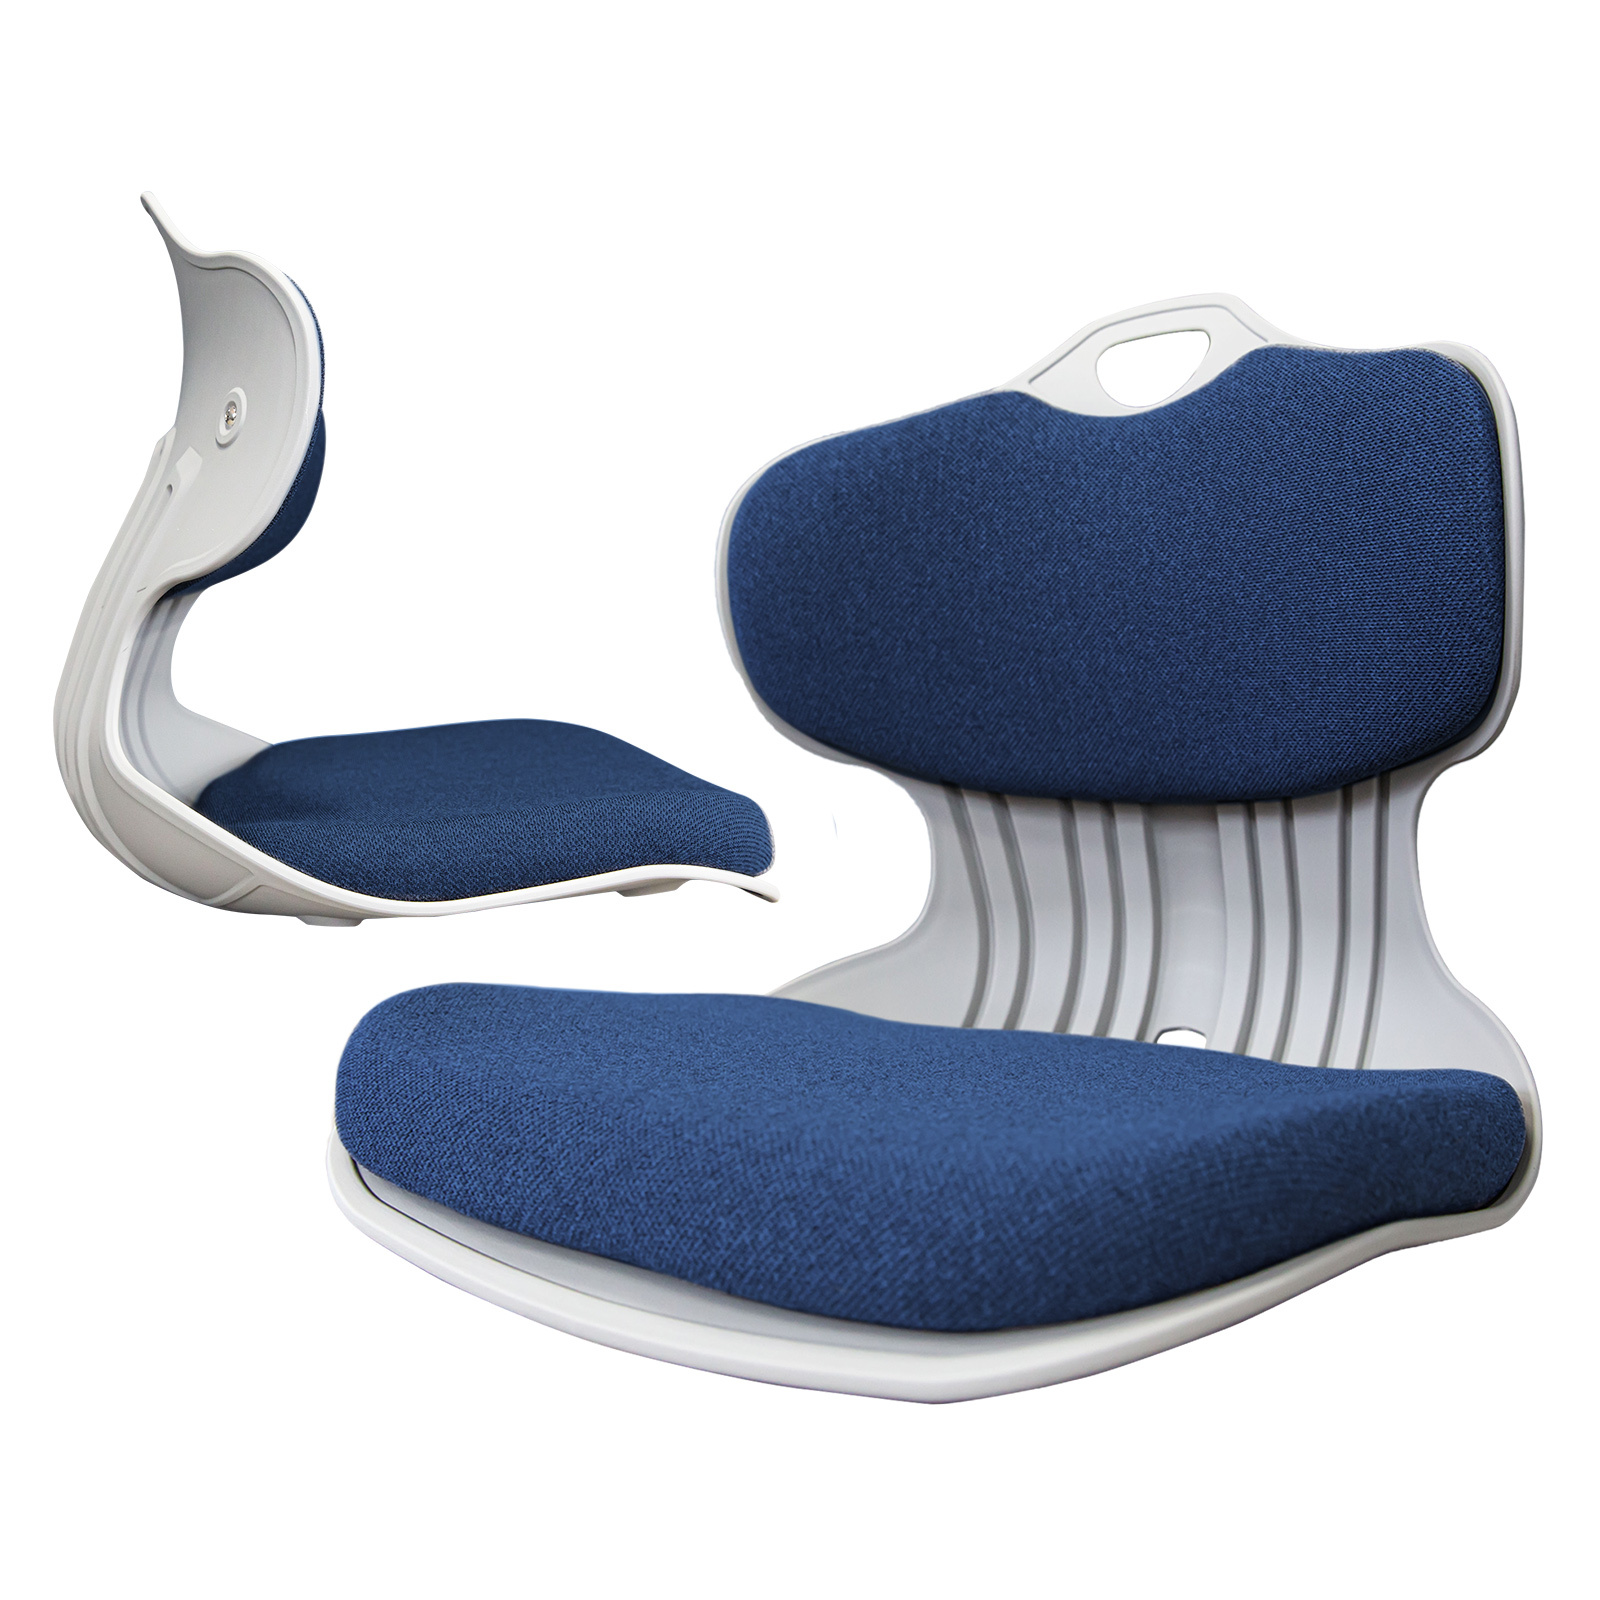 2X Korean Slender Posture Correction Chair - BLUE